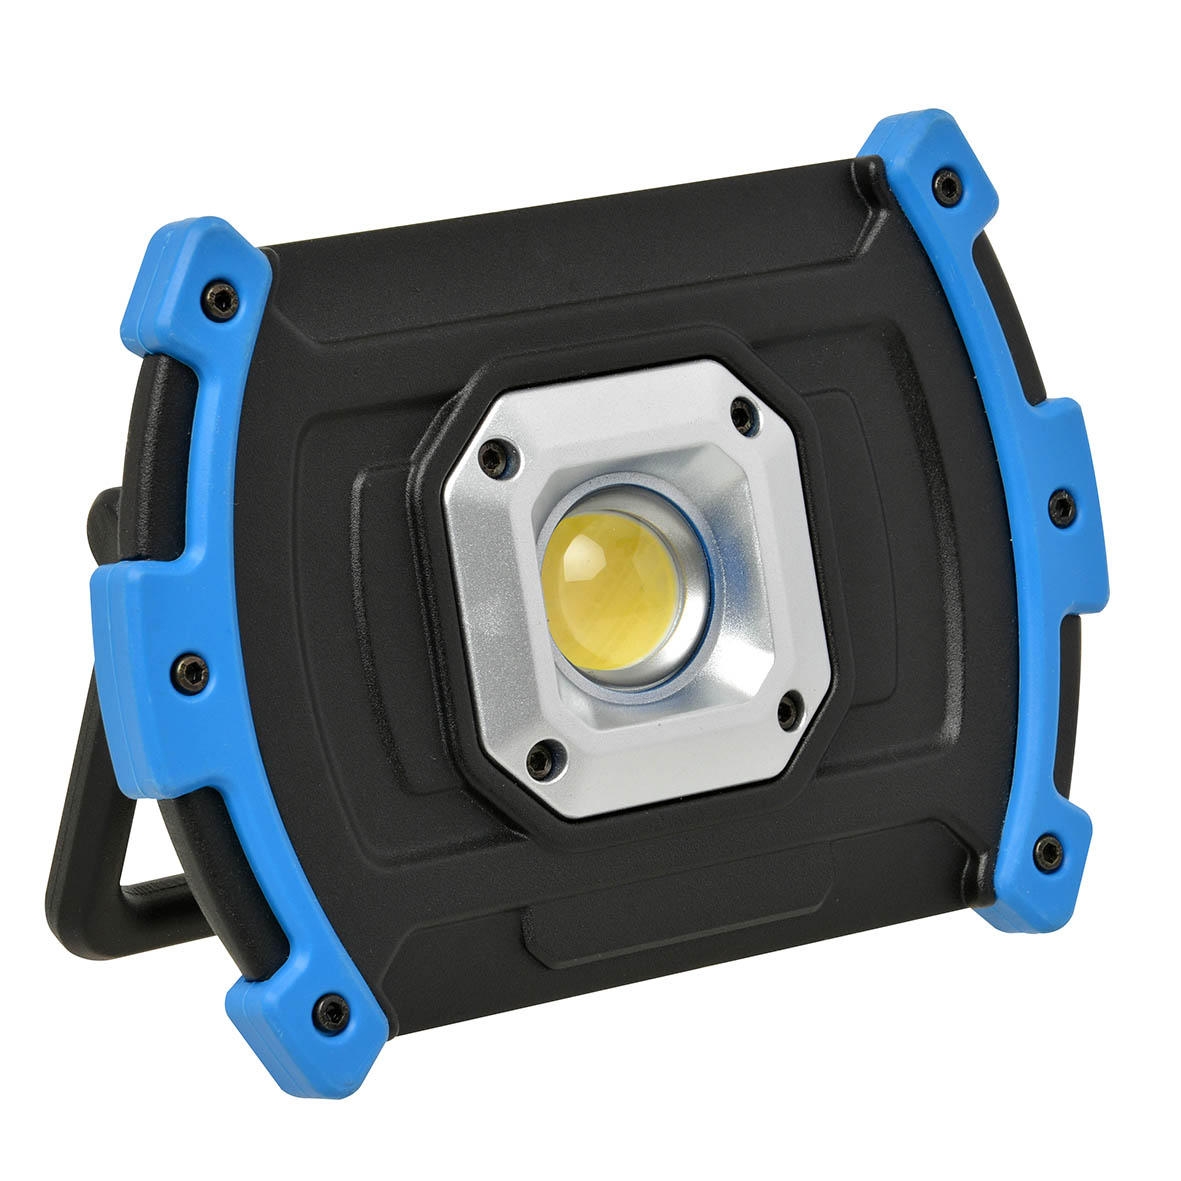 Verkoop :: Bouwlampen LED :: LED Bouwlamp statief 49333 Oplaadbare Werklamp 10W - 1000 Lumen - JSK handelsonderneming